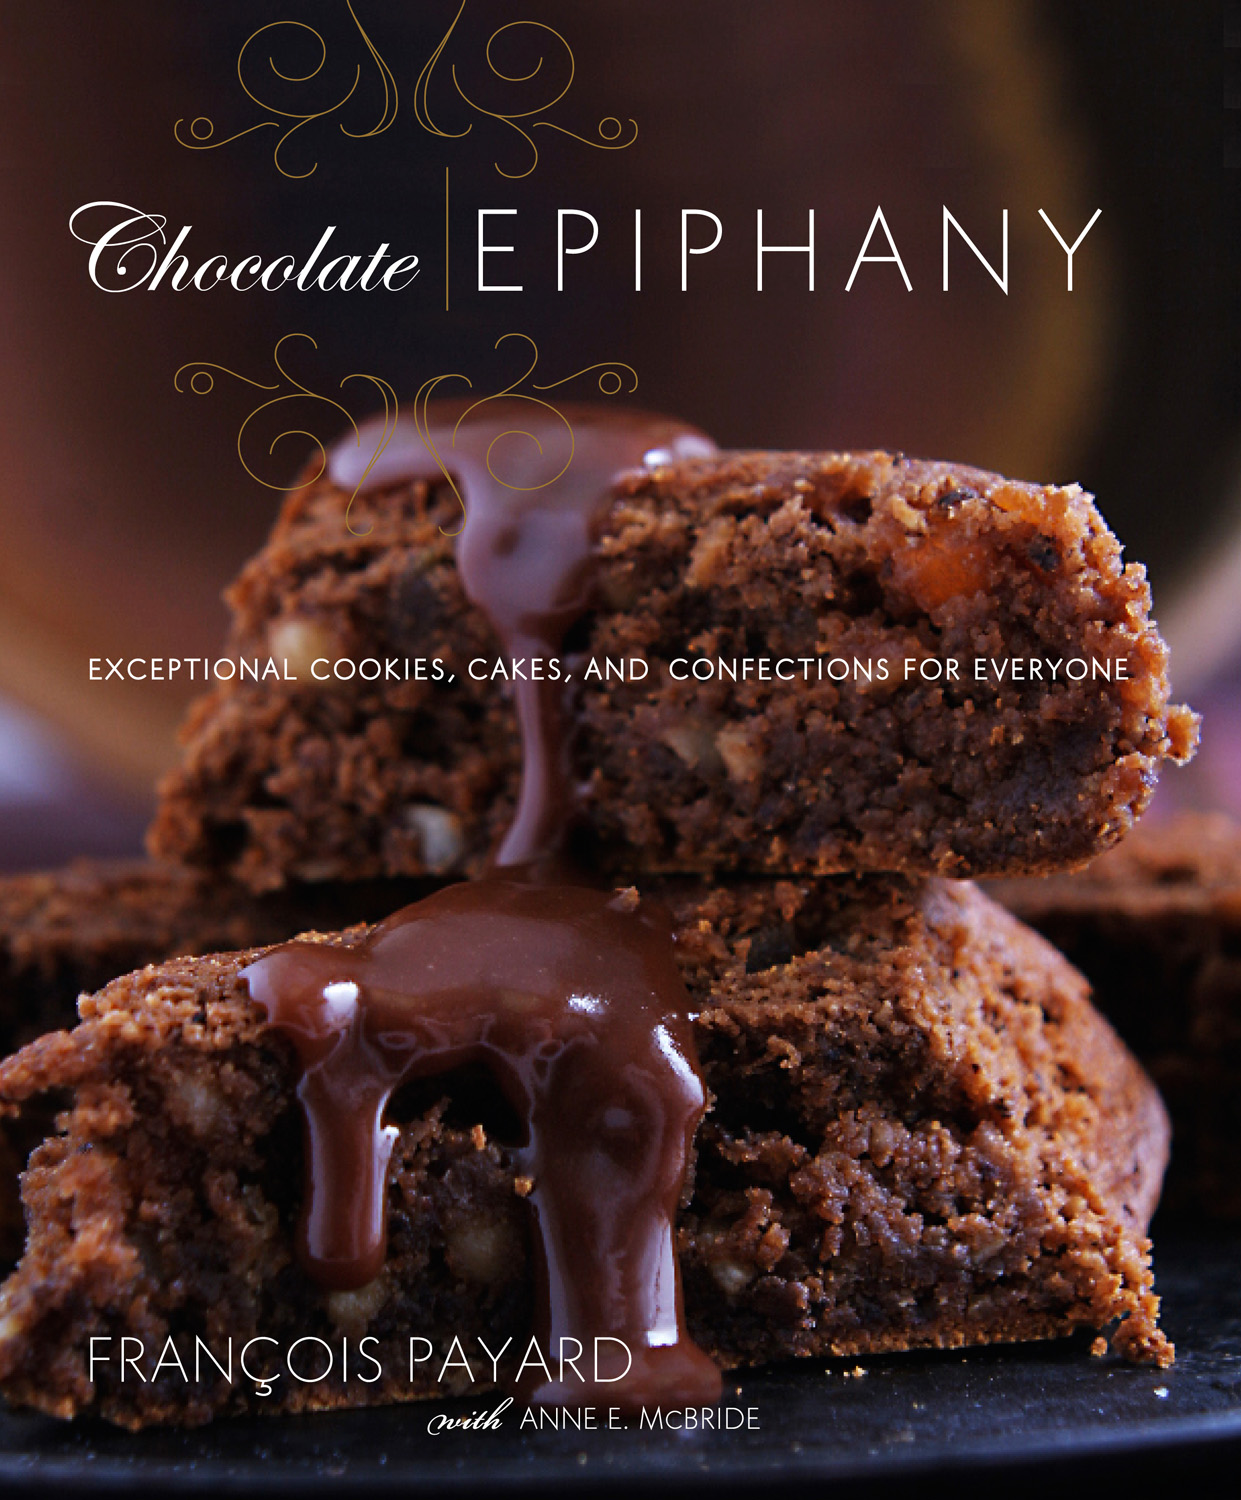 Maureen-Erbe-Design-Chocolate-Epiphany-Francoise-Payard01.jpg